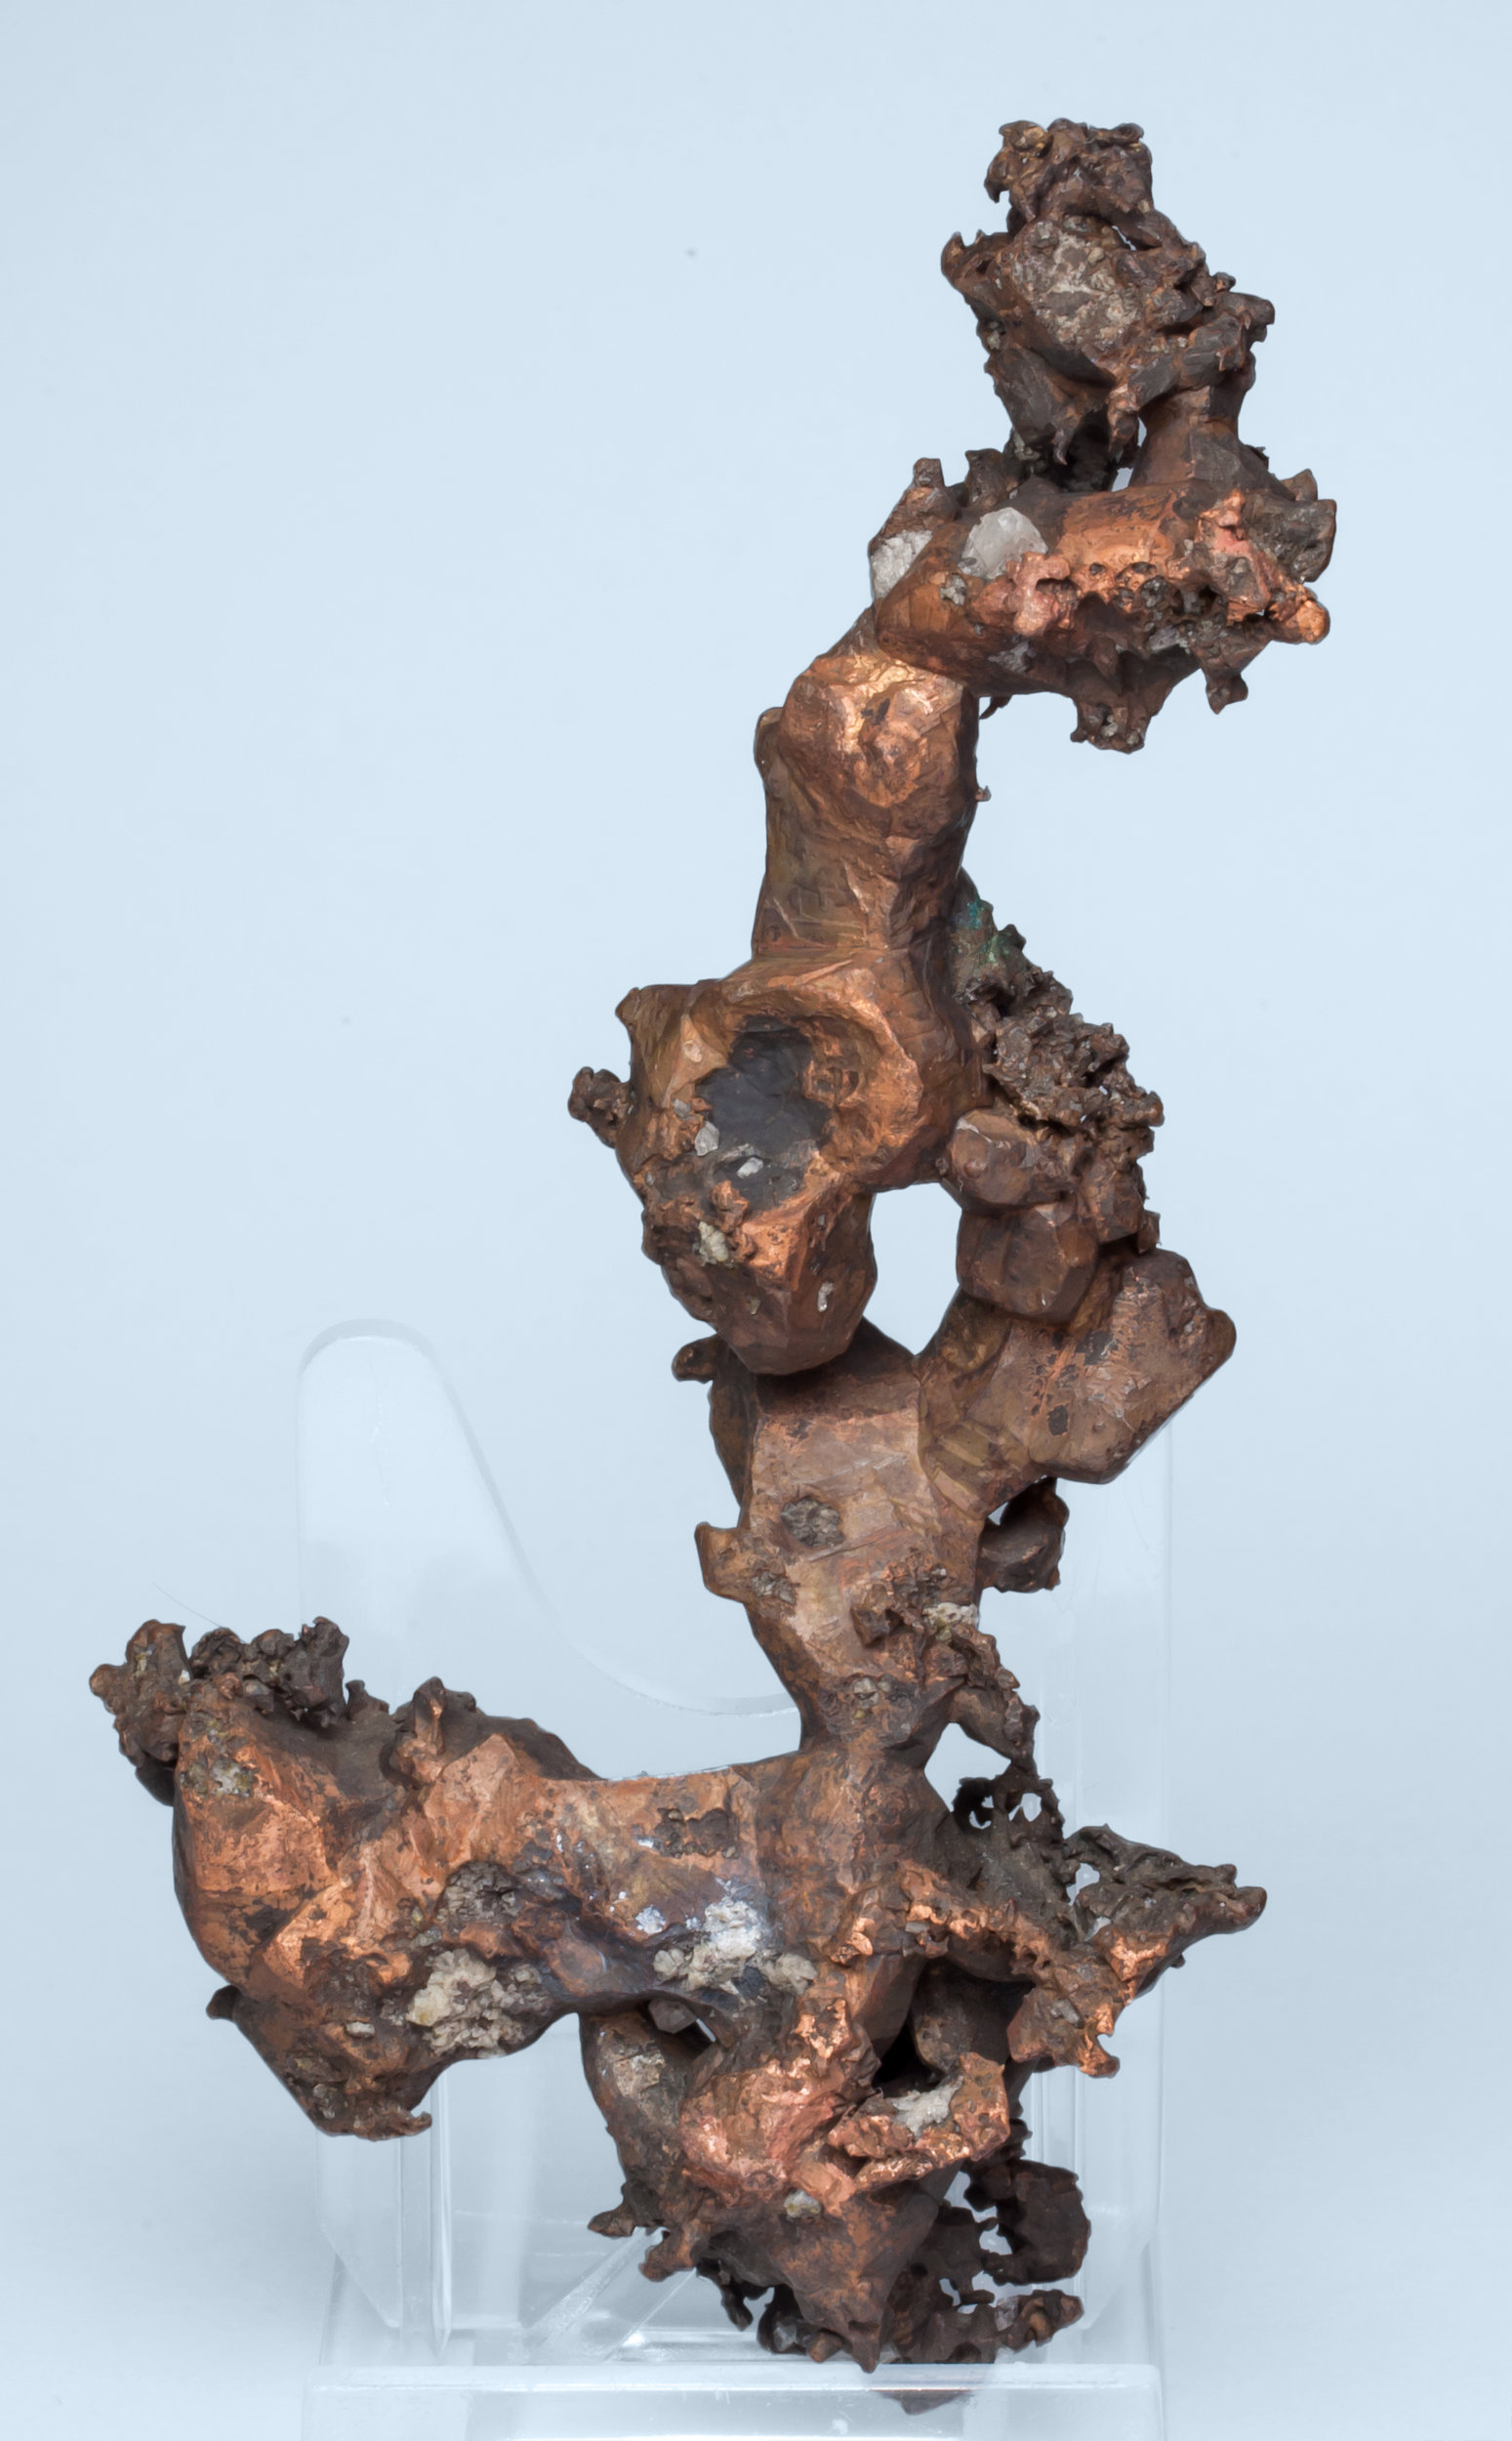 specimens/s_imagesAL3/Copper-TX71AL3r.jpg